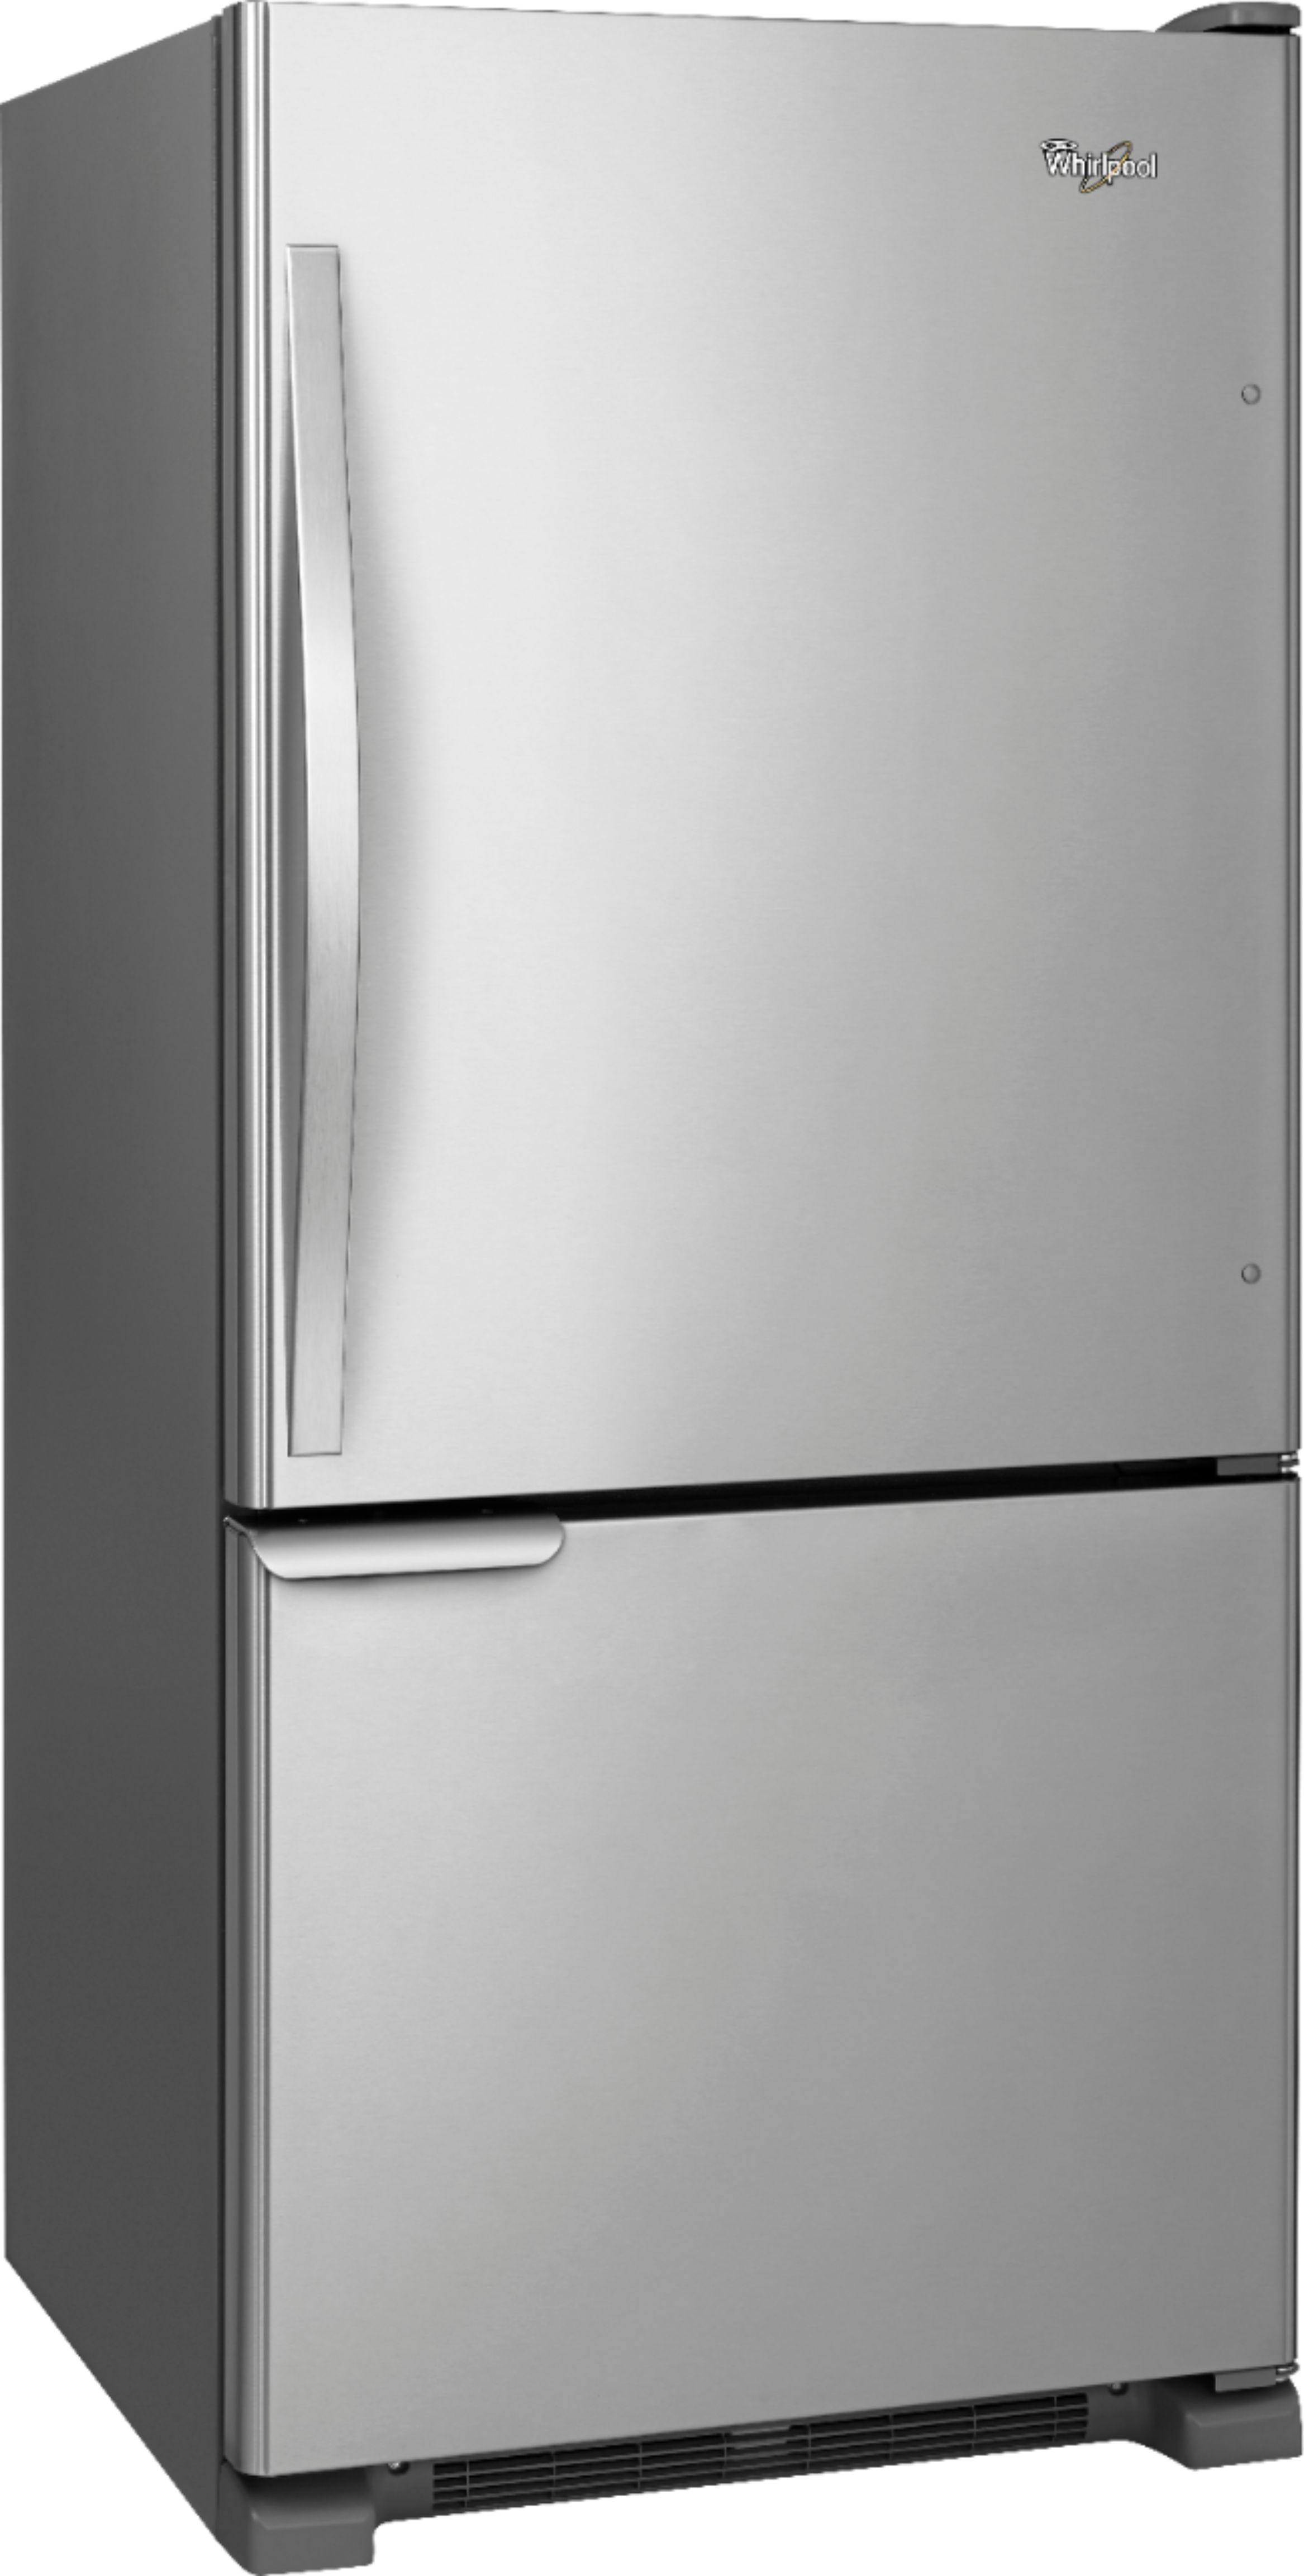 Angle View: Whirlpool - 18.5 Cu. Ft. Bottom-Freezer Refrigerator - Stainless steel